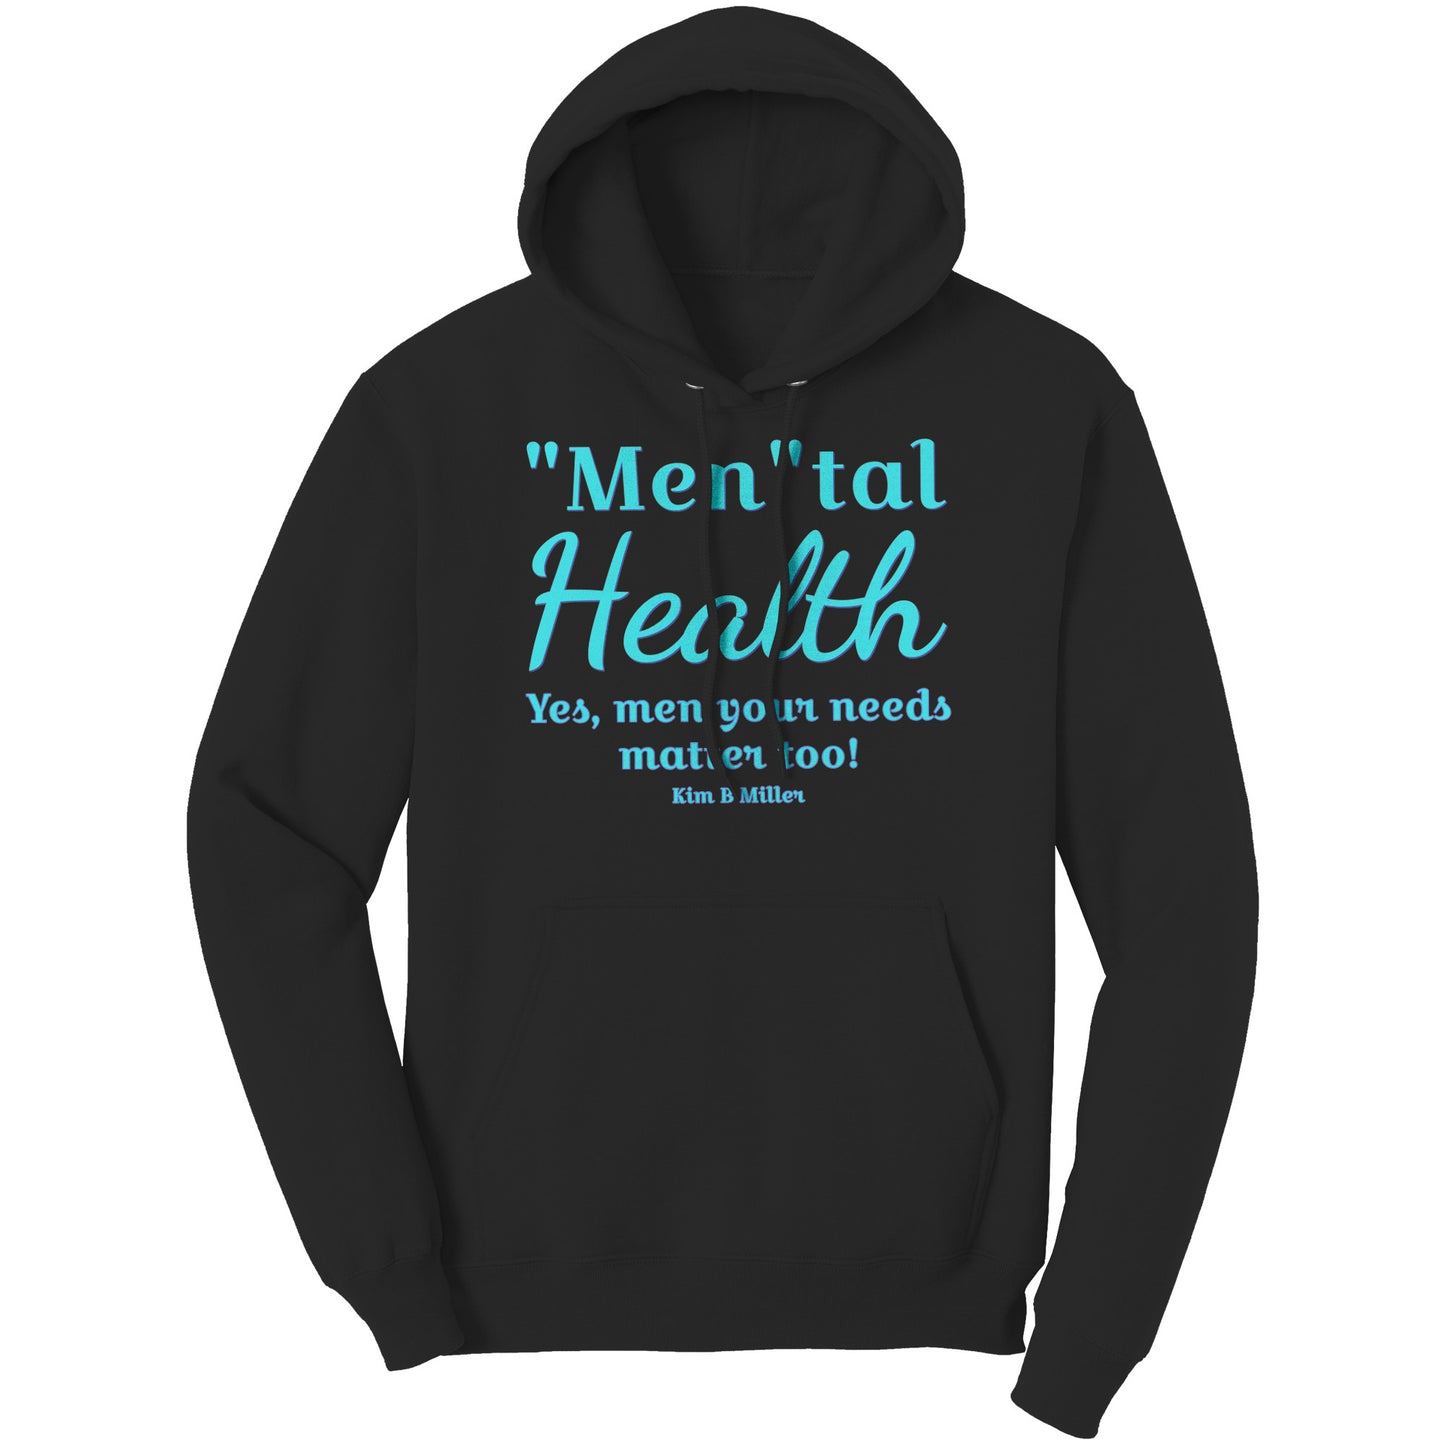 "Men"tal Health: Port & Co Hoodie (Both Sides)